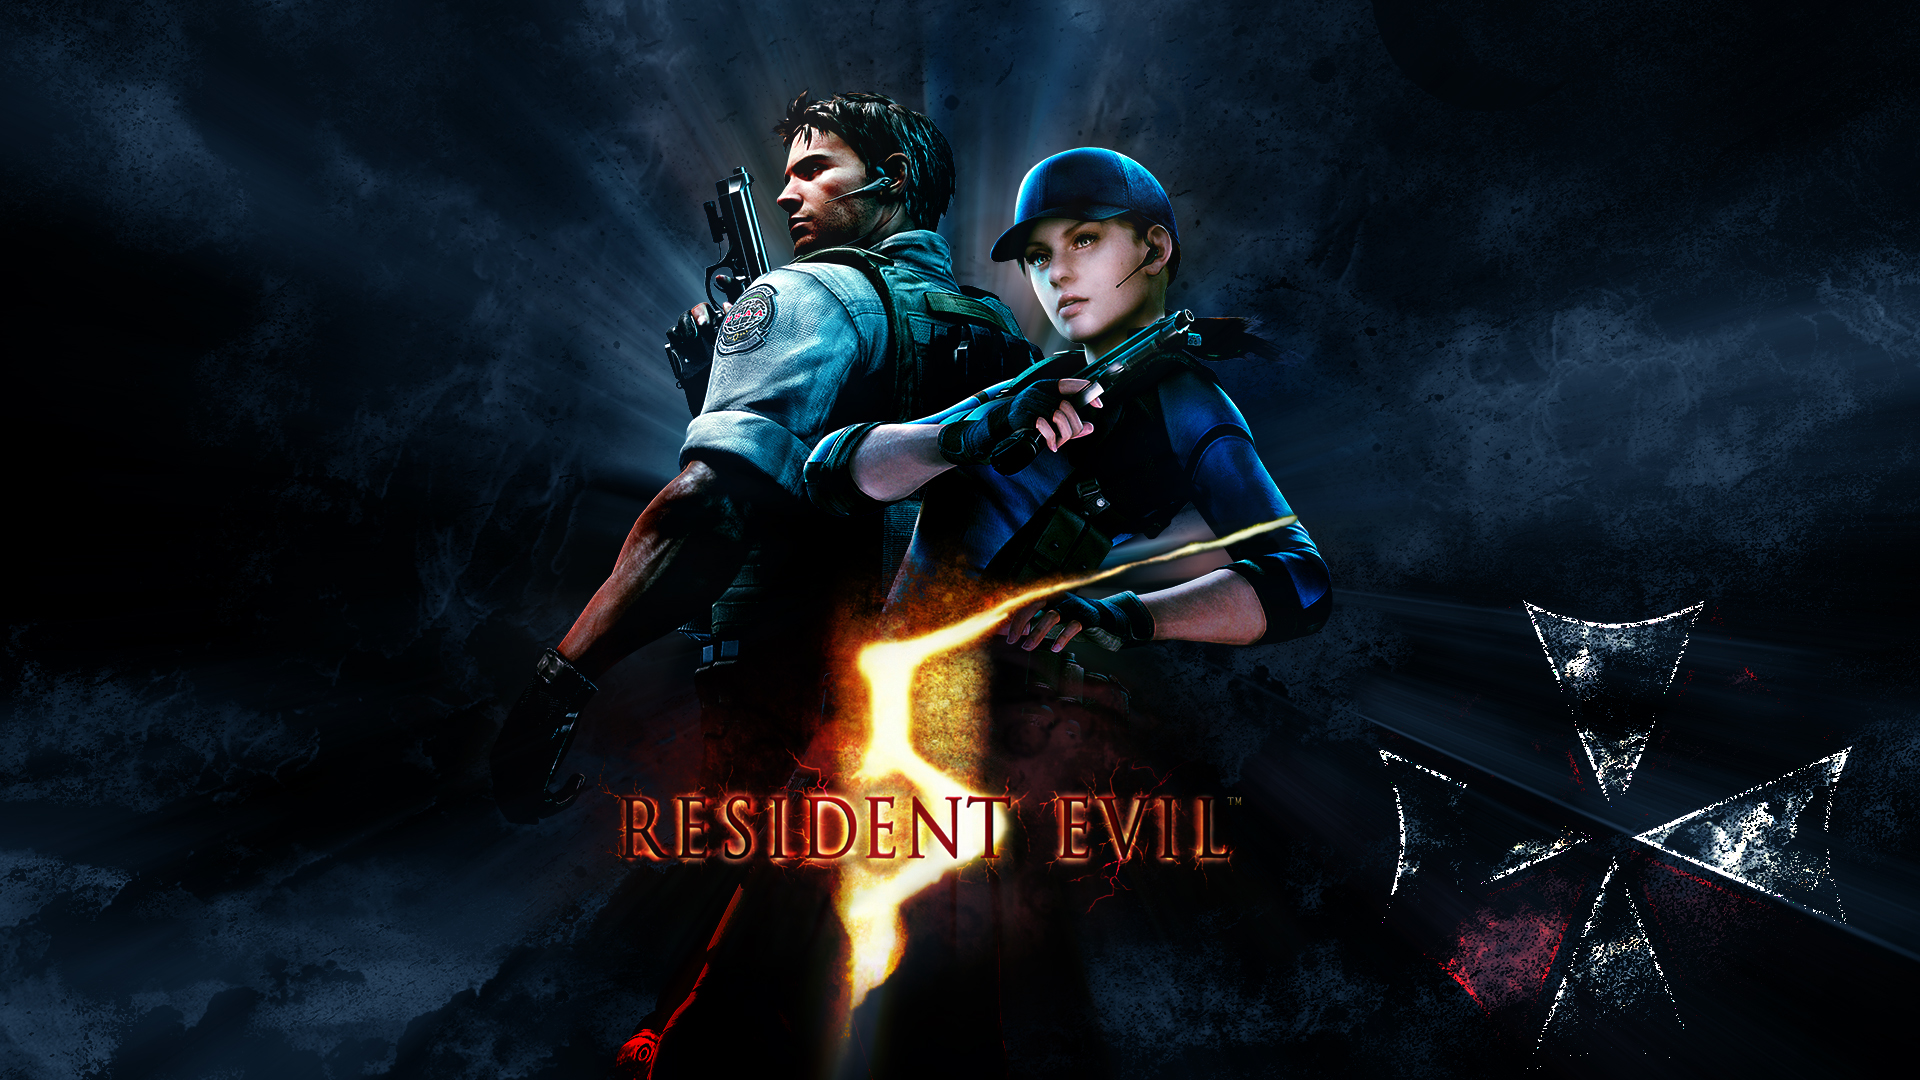 Resident evil 5 кооператив на пиратке steam фото 55